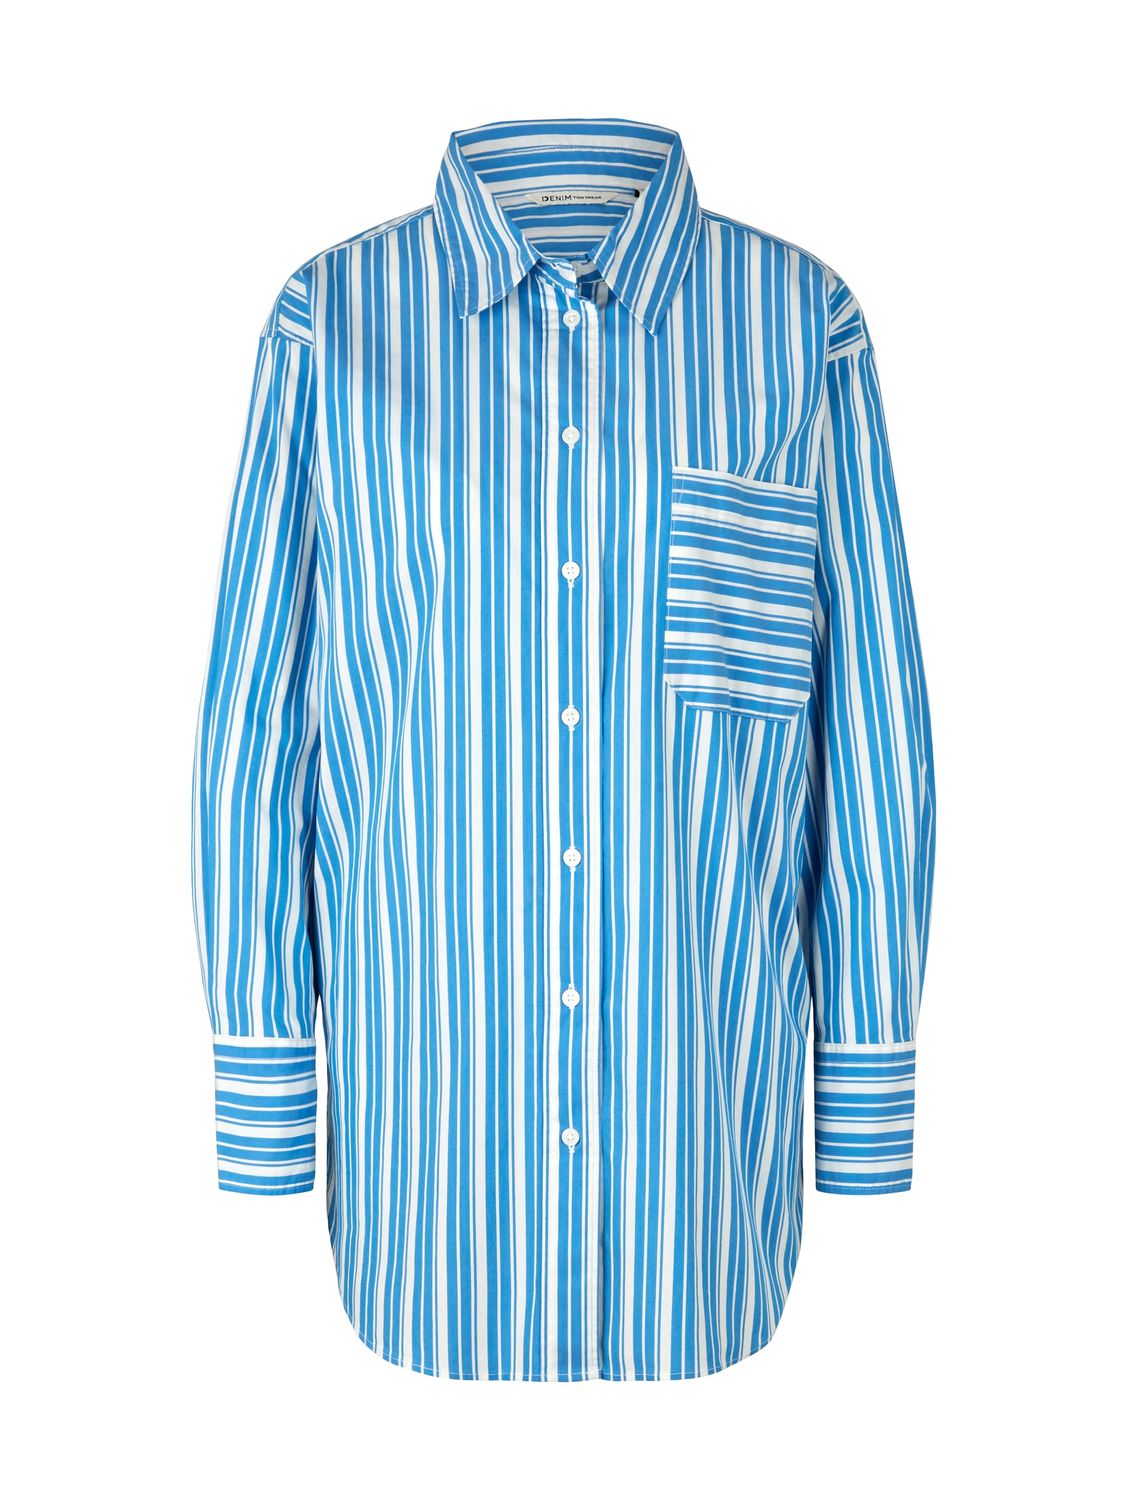 Блуза TOM TAILOR Denim CHEST POCKET, синий футболка tom tailor размер xl белый синий